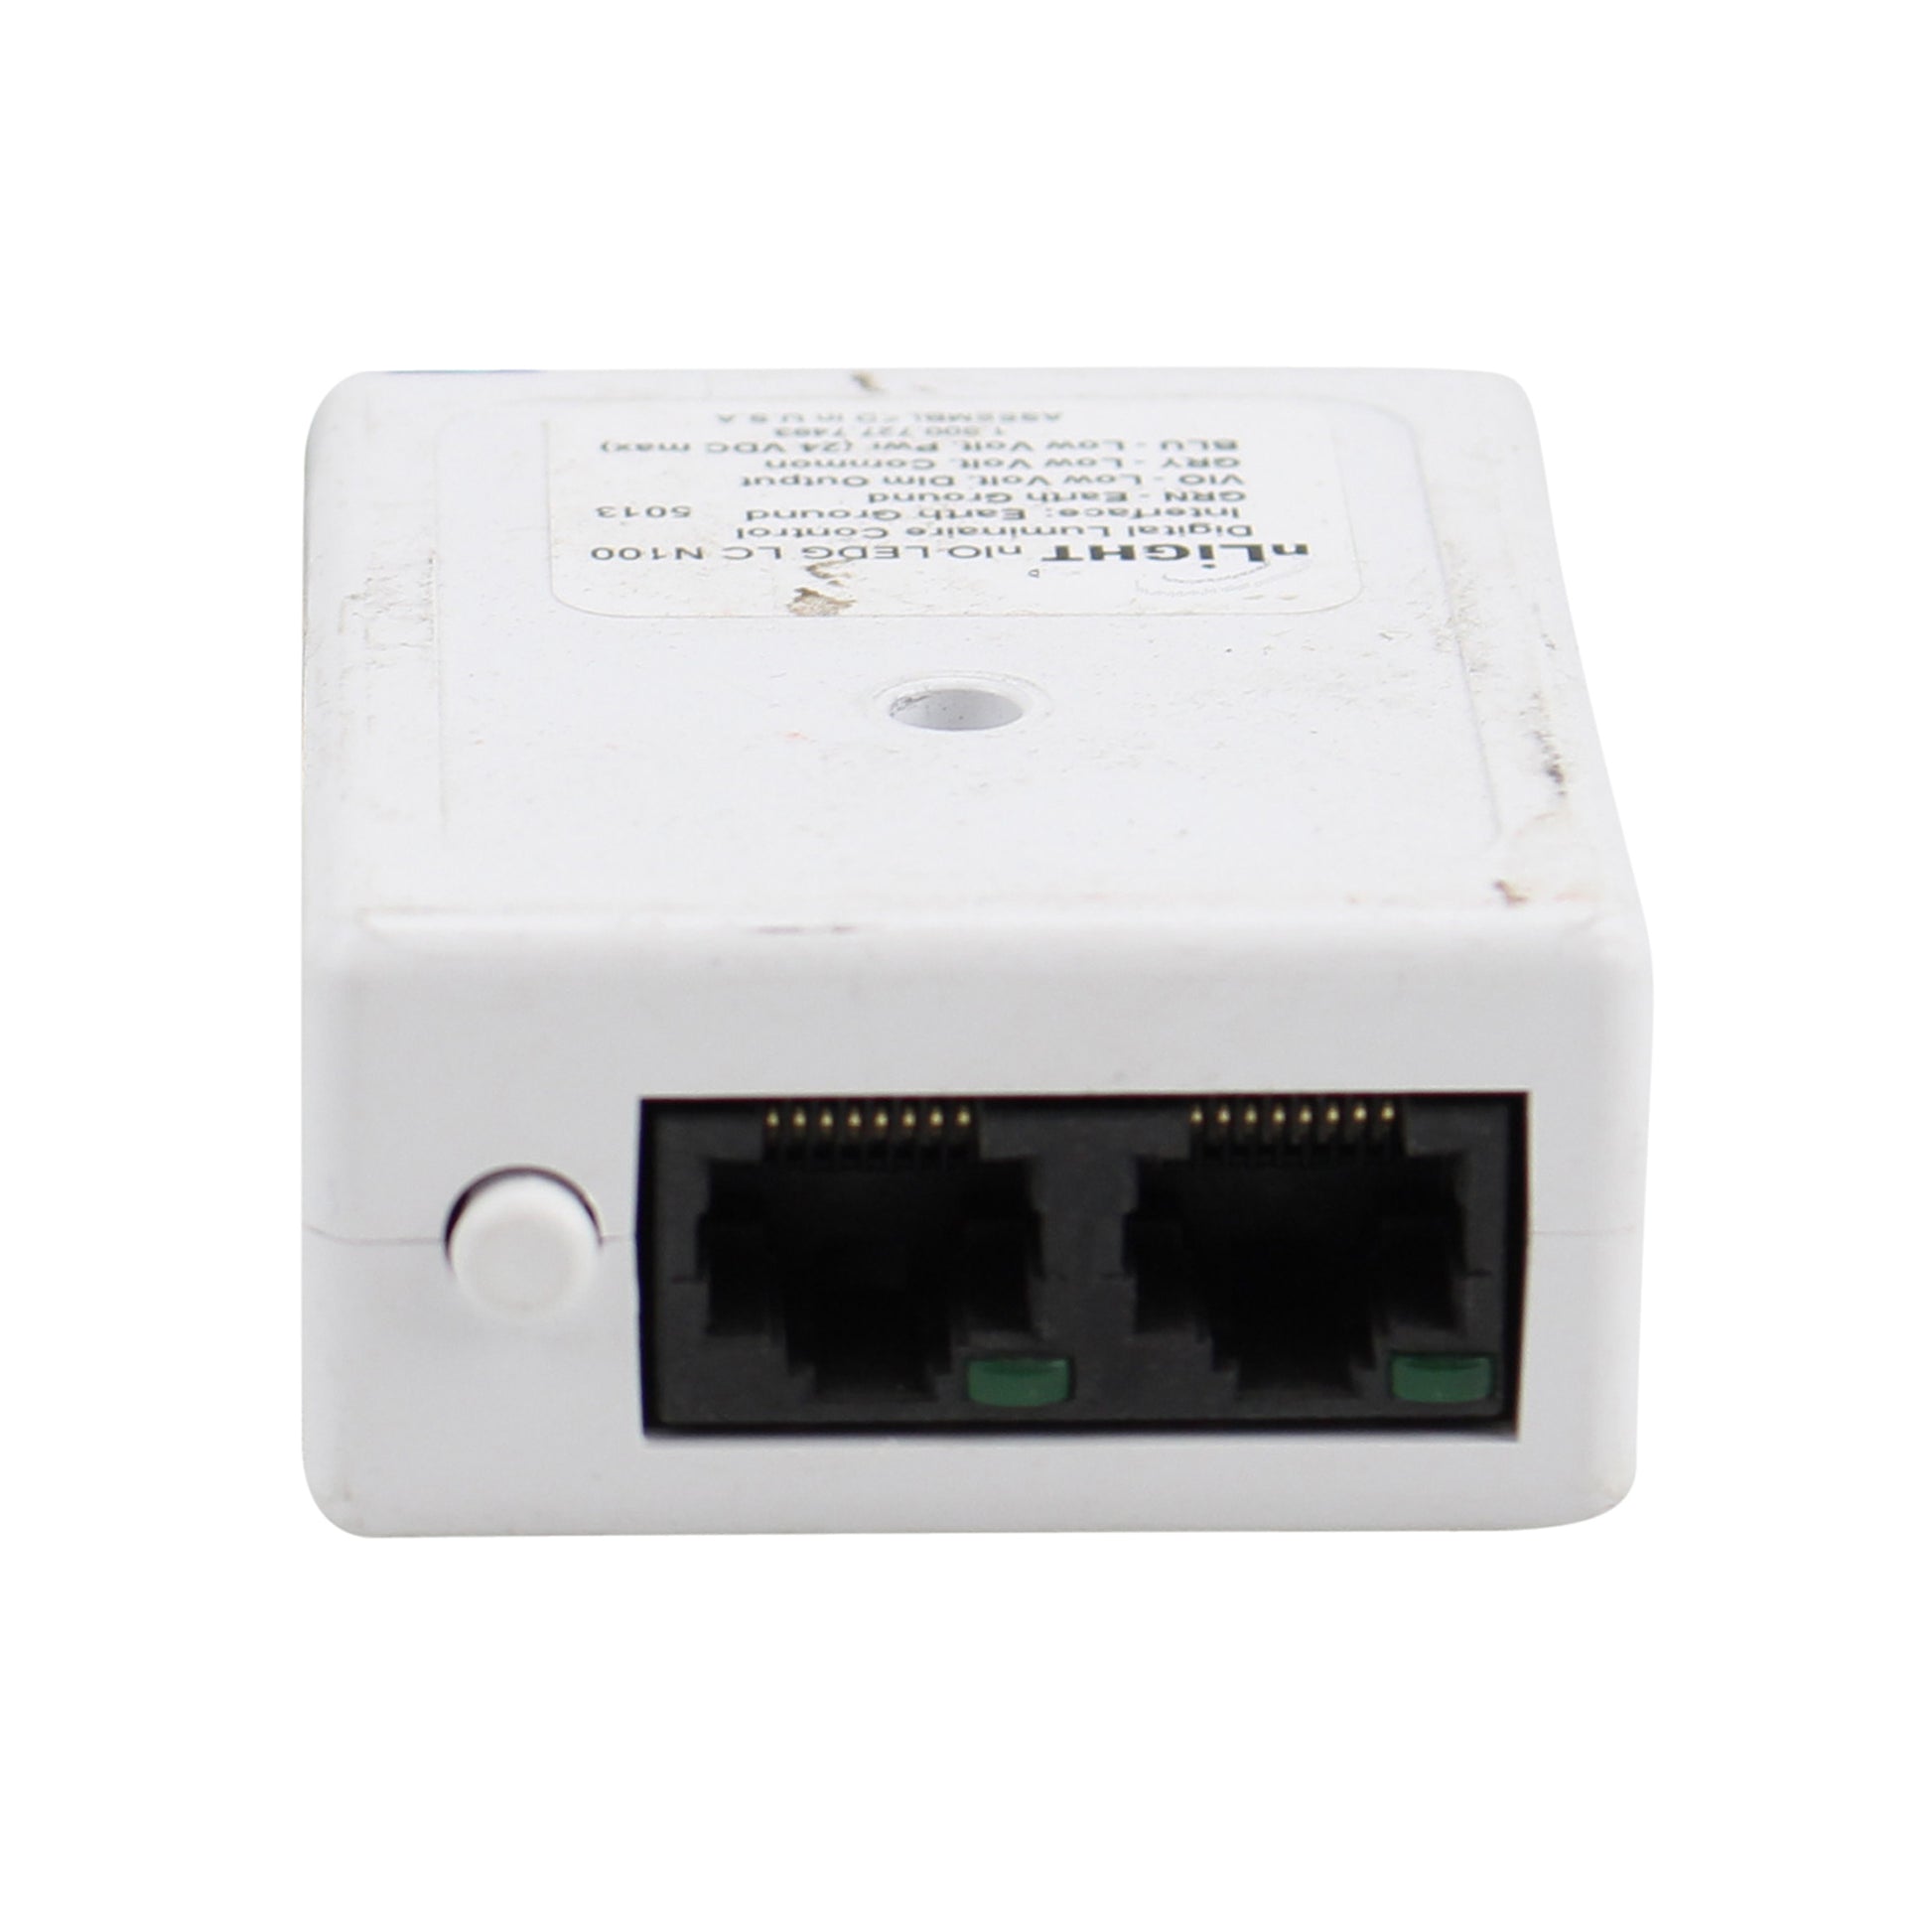 Sensor Switch N10-LEDG-LC-N100